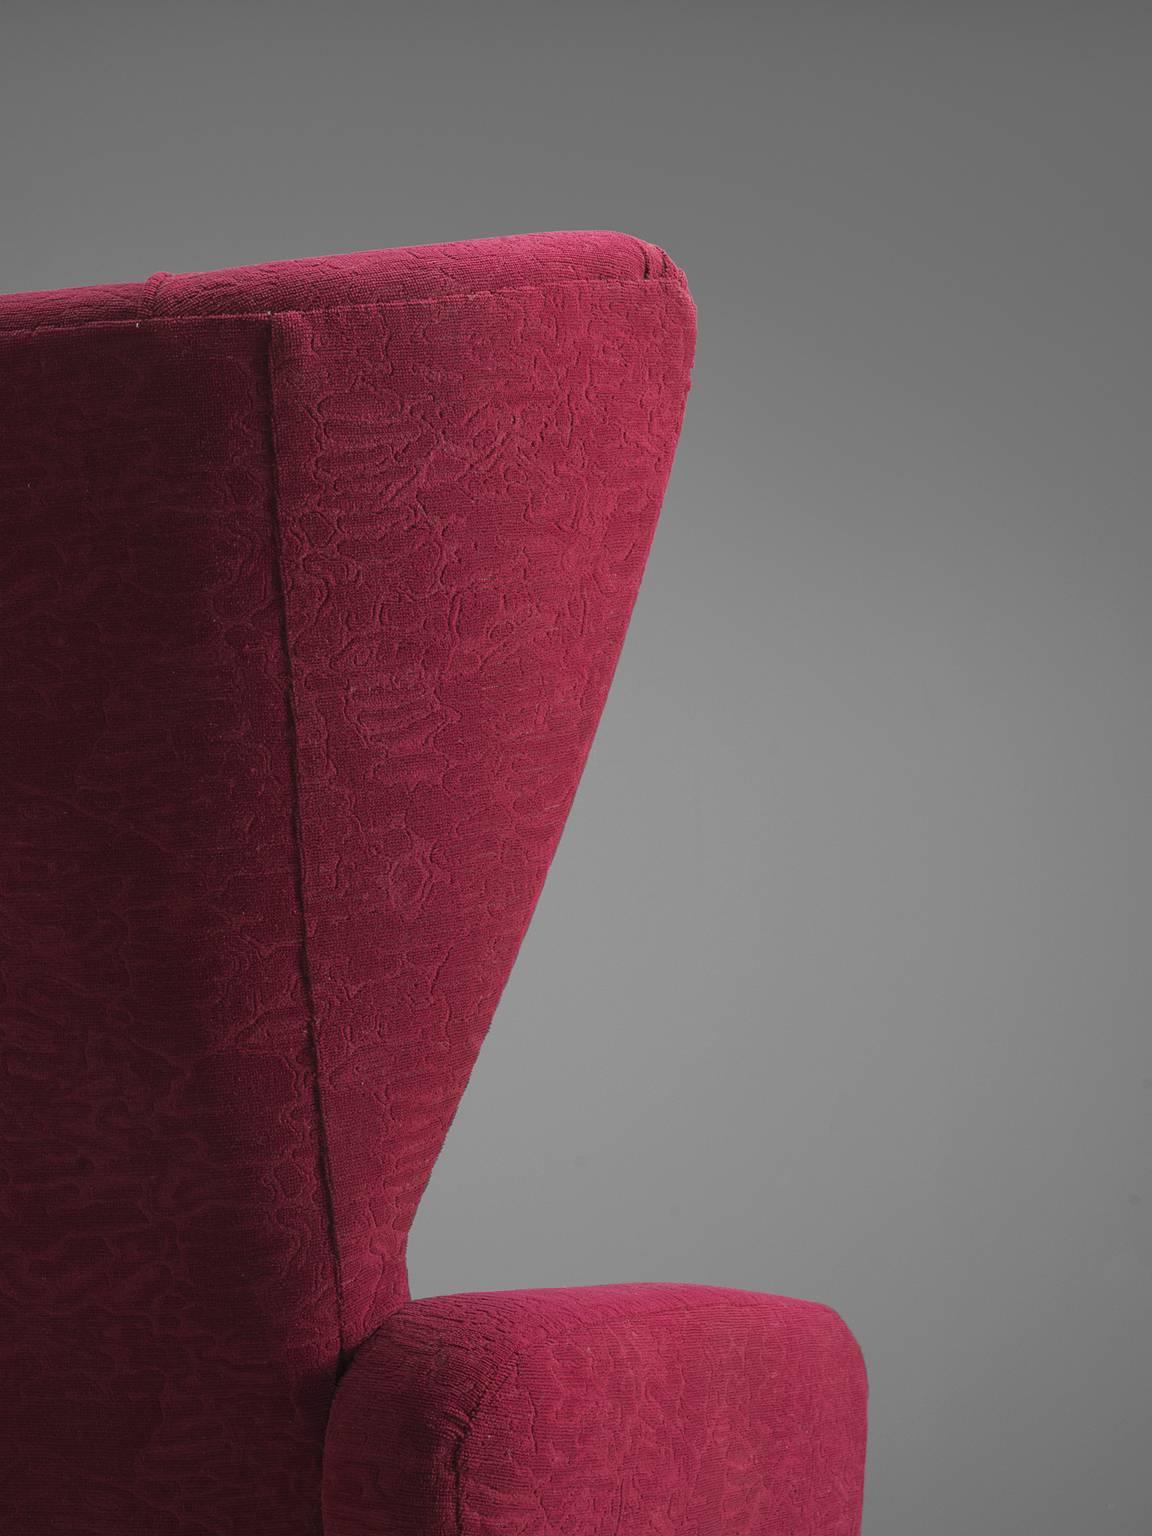 Mid-20th Century Italian Wingback Chair in Maroon Fabric